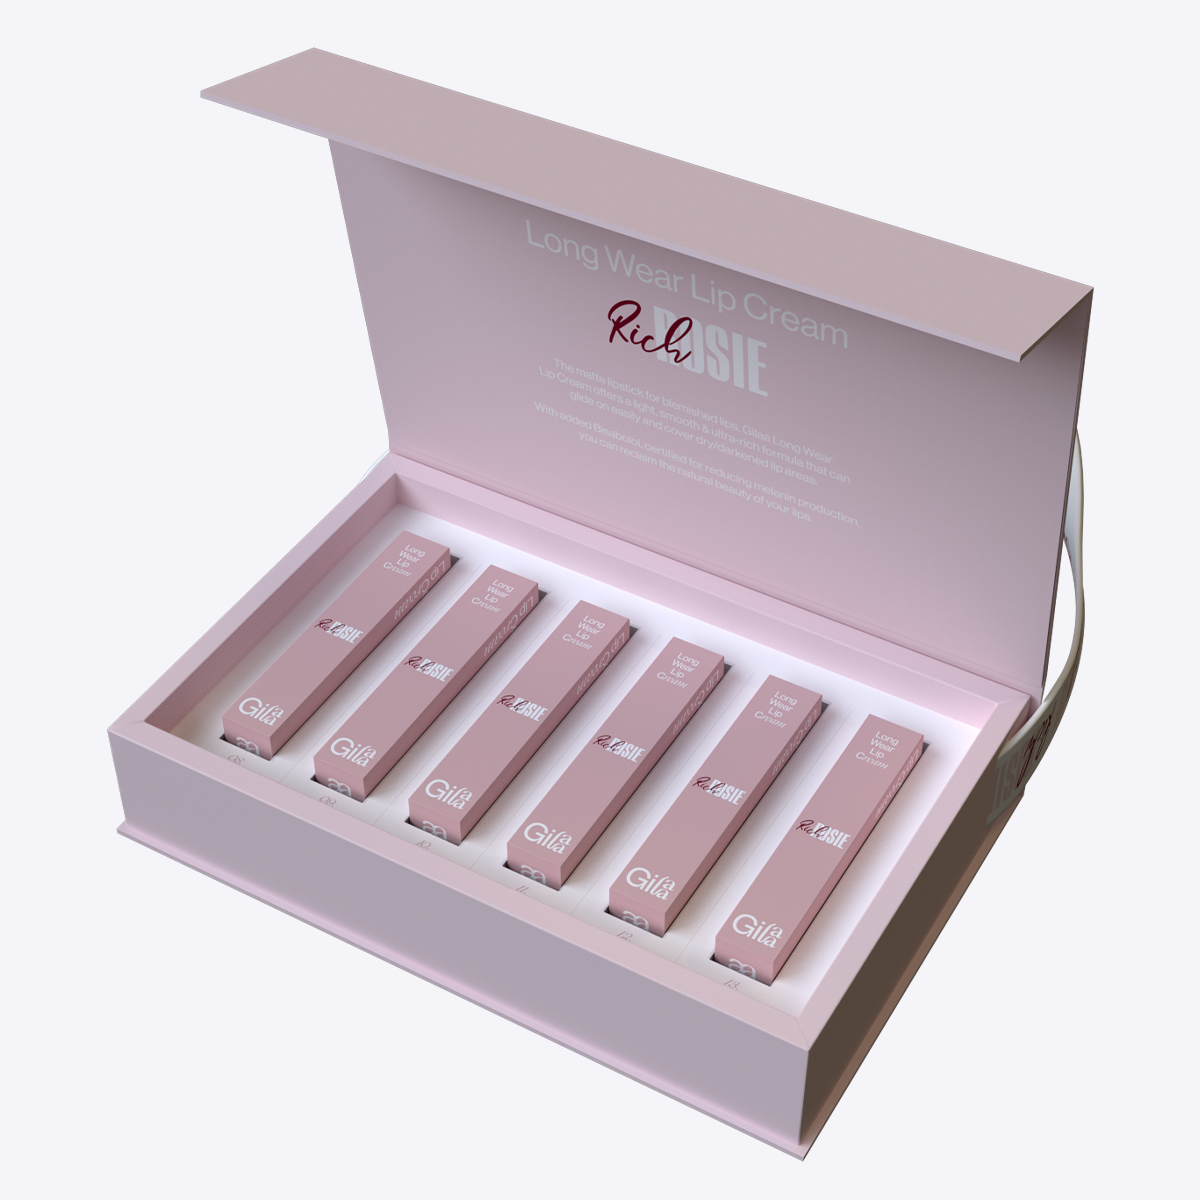  Gilaa Long Wear Lip Cream Rich Rosie Collection Box (6x5g) 